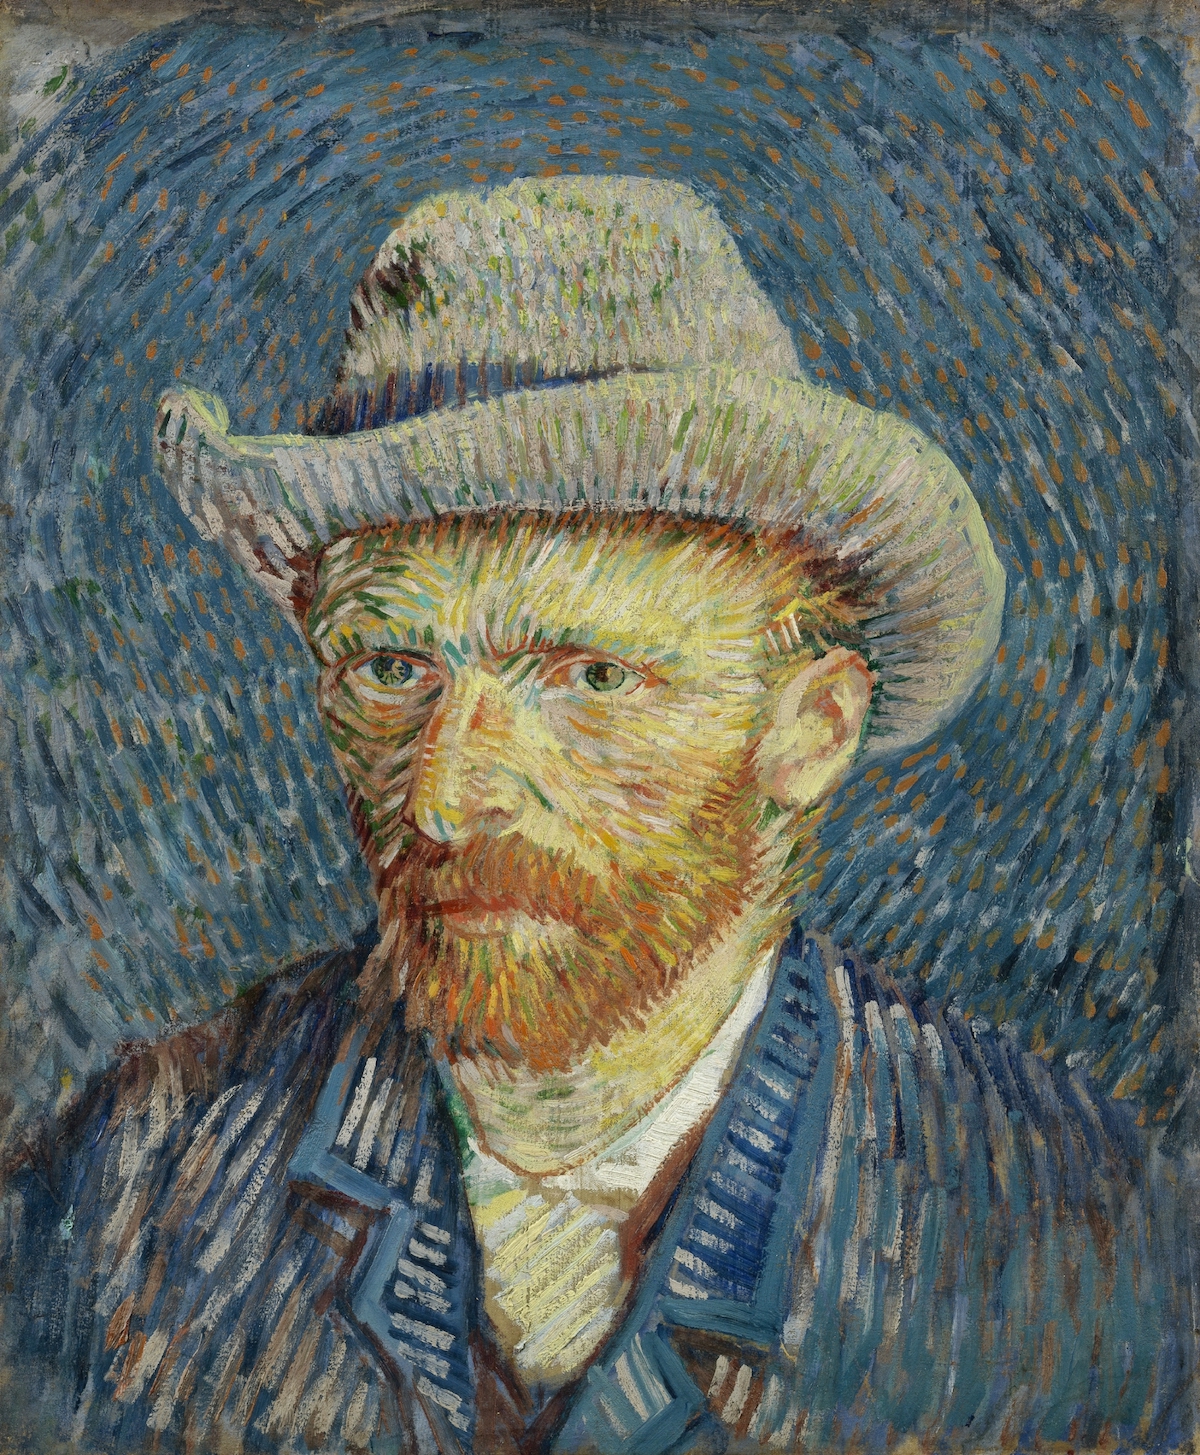 The Wick - Vincent van Gogh (1853 - 1890), Self-Portrait with Grey Felt Hat, September - October 1887, Van Gogh Museum, Amsterdam (Vincent van Gogh Foundation)